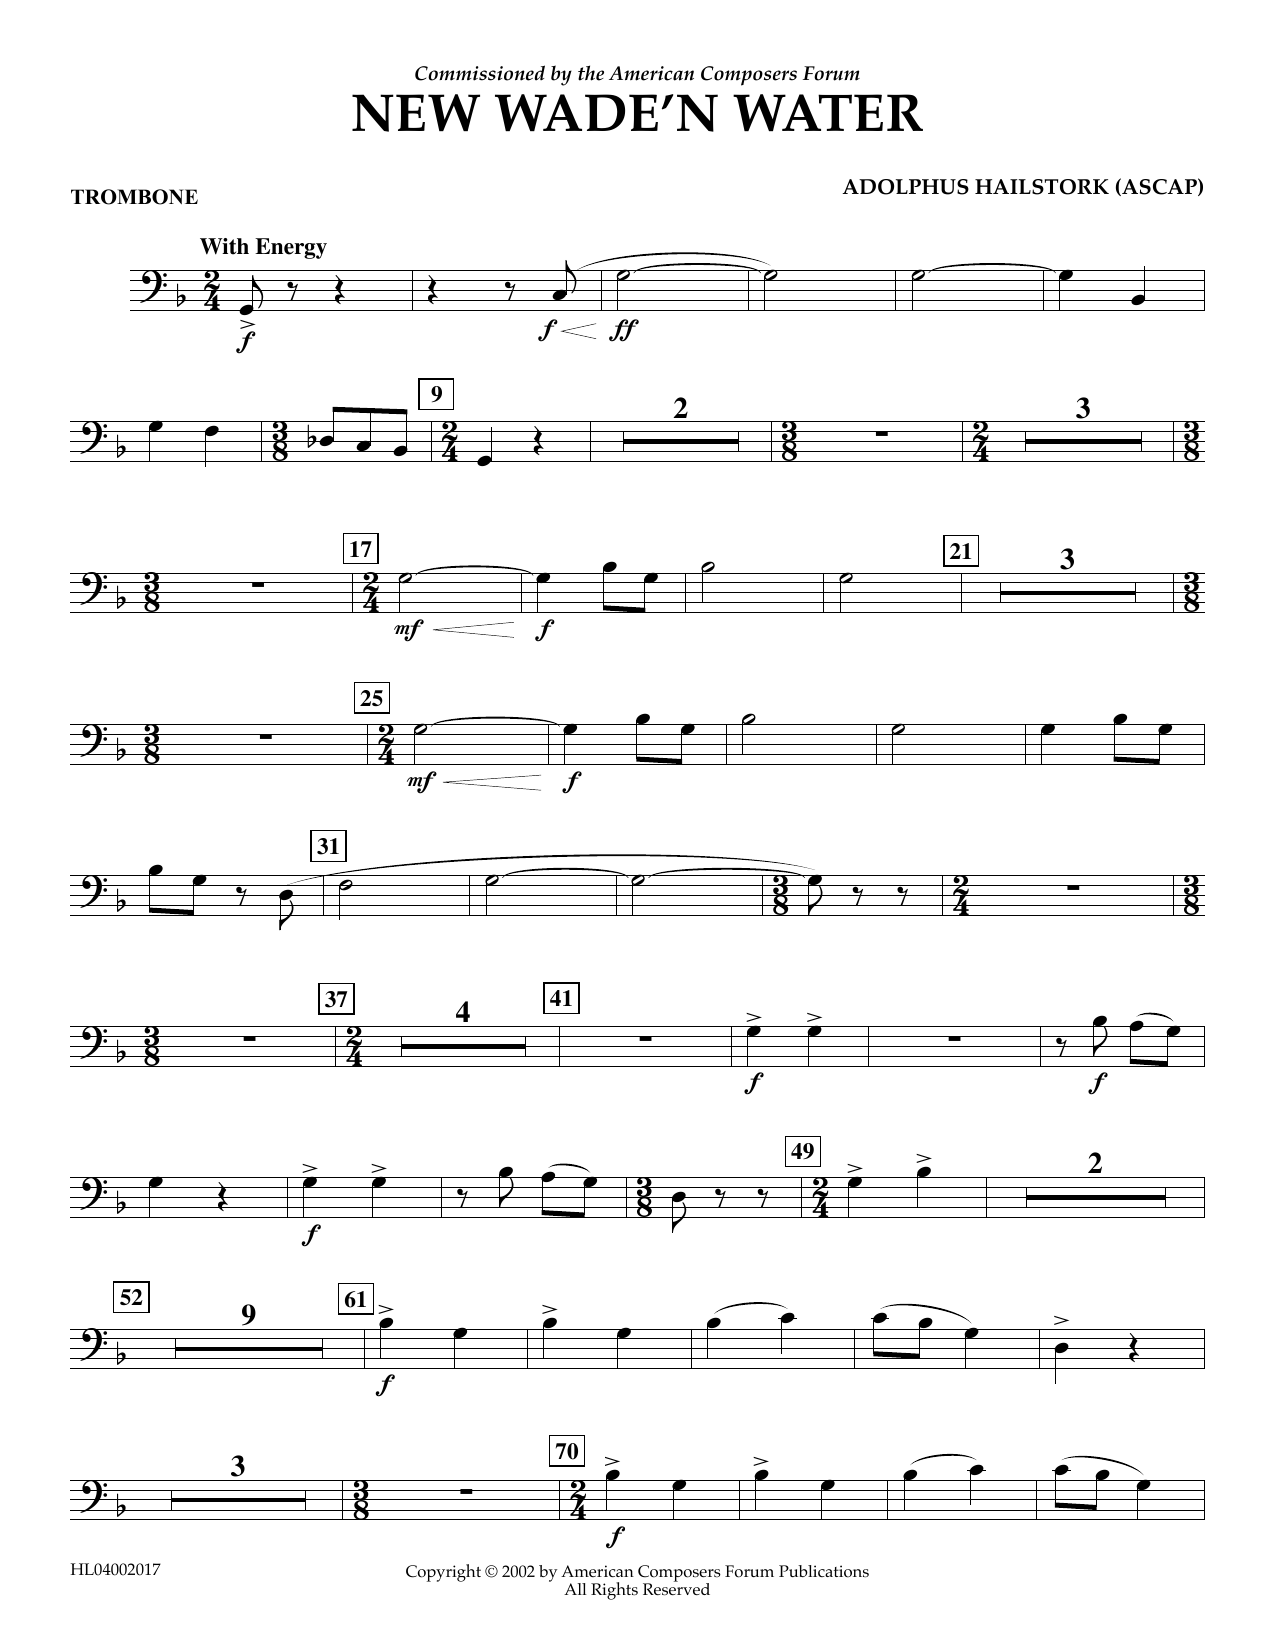 Download Adolphus Hailstork New Wade 'n Water - Trombone Sheet Music